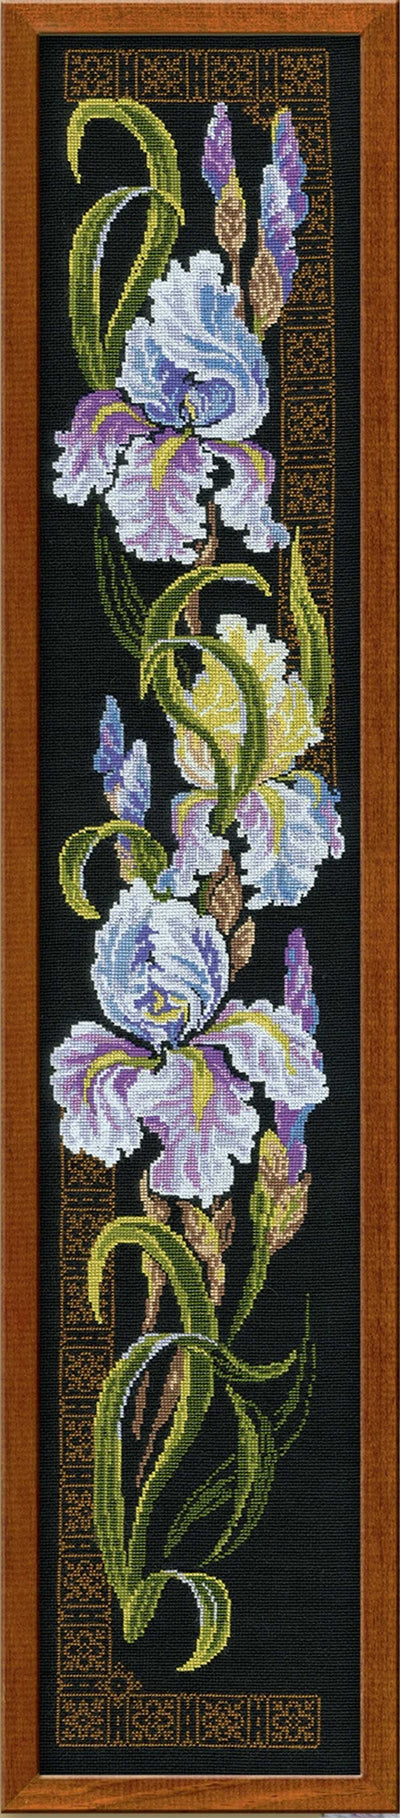 Riolis Cross Stitch Kit - Irises